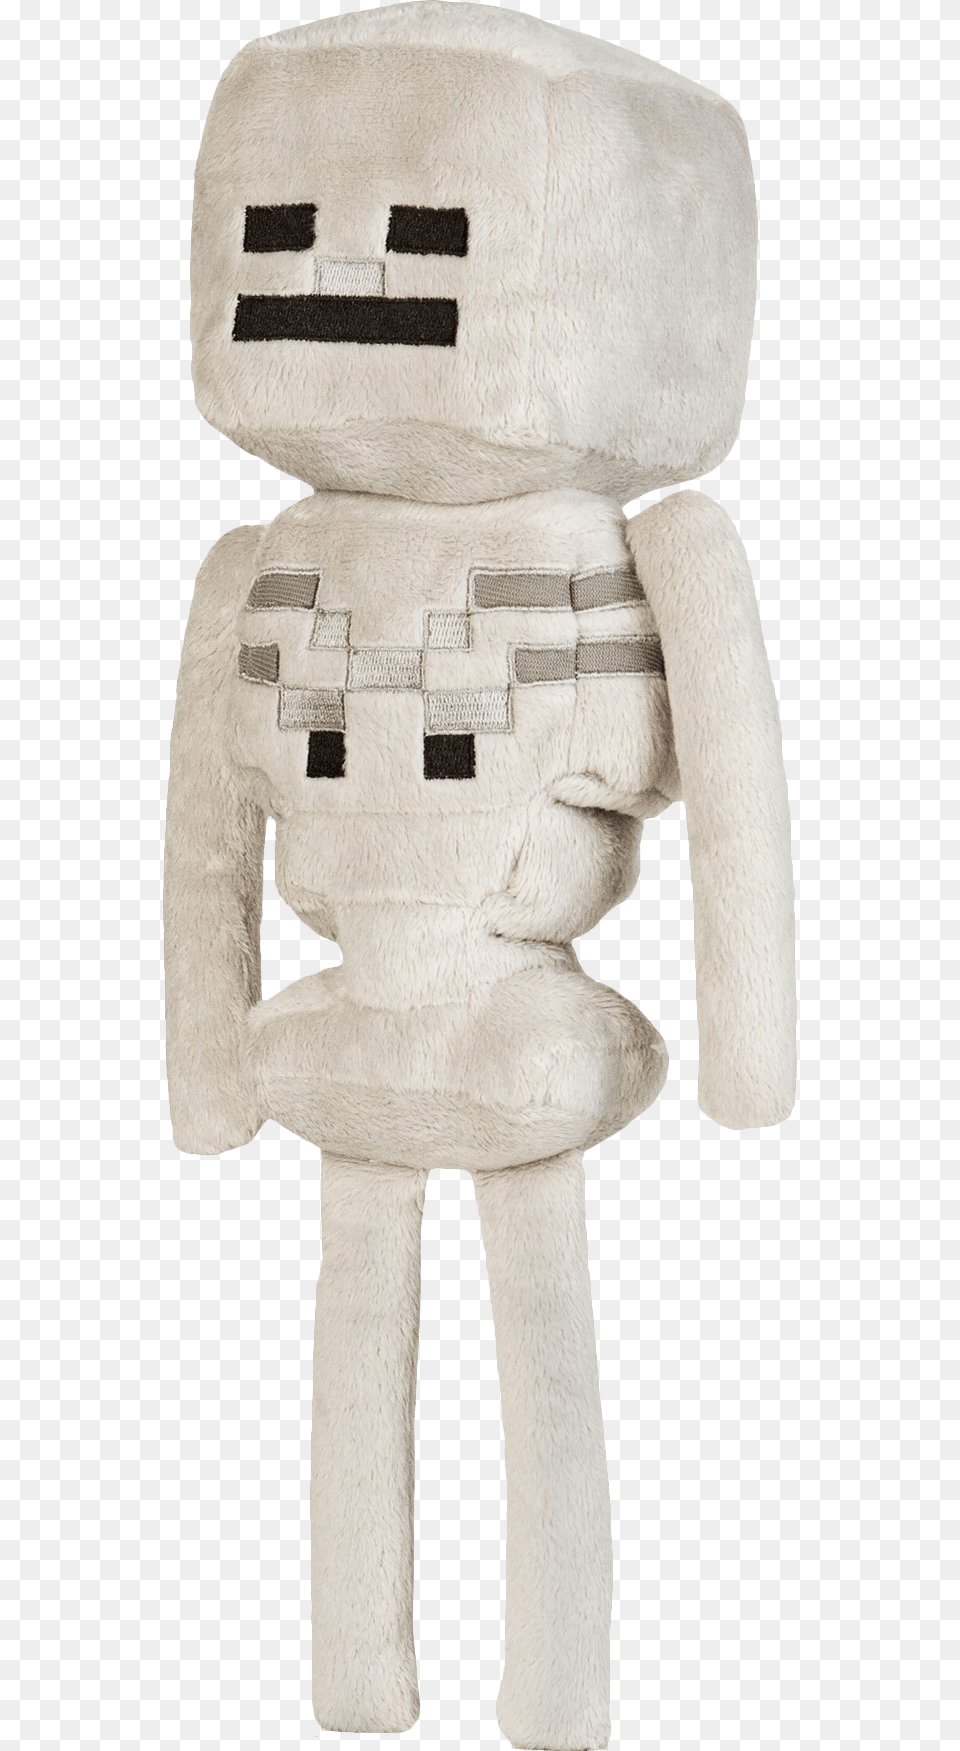 Minecraft Skeleton, Home Decor, Cushion, Plush, Toy Free Png